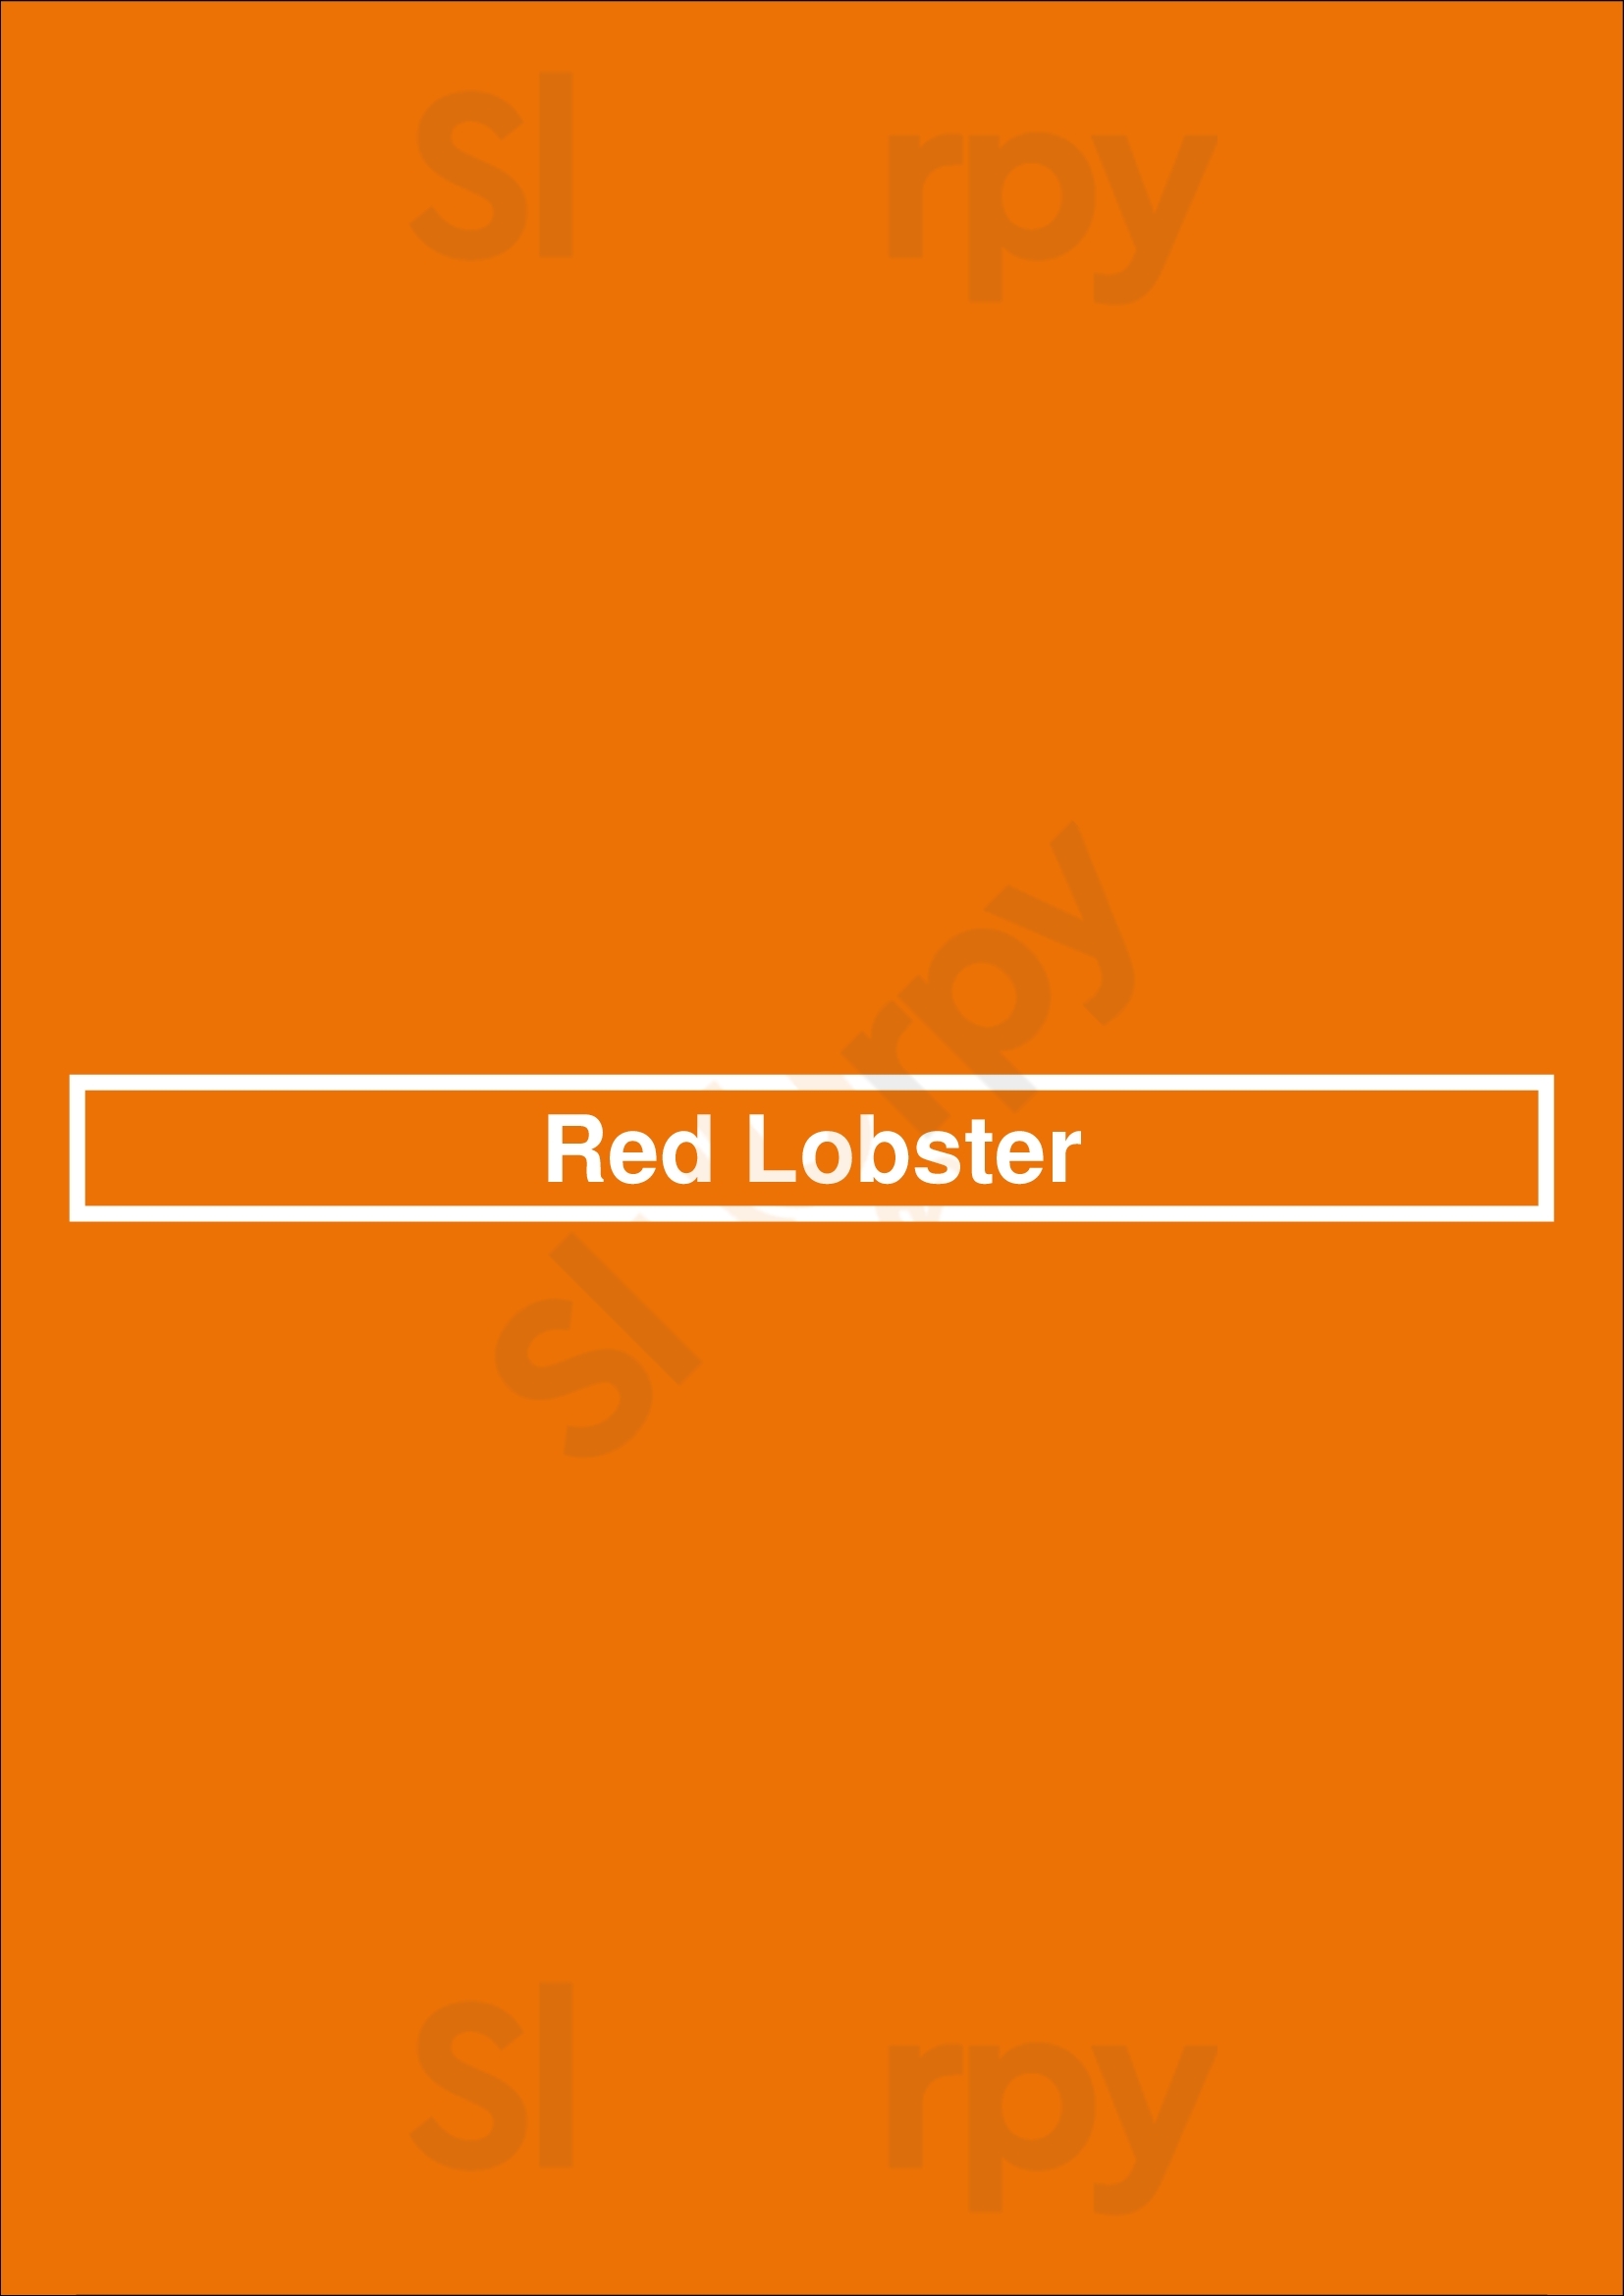 Red Lobster Niagara Falls Menu - 1